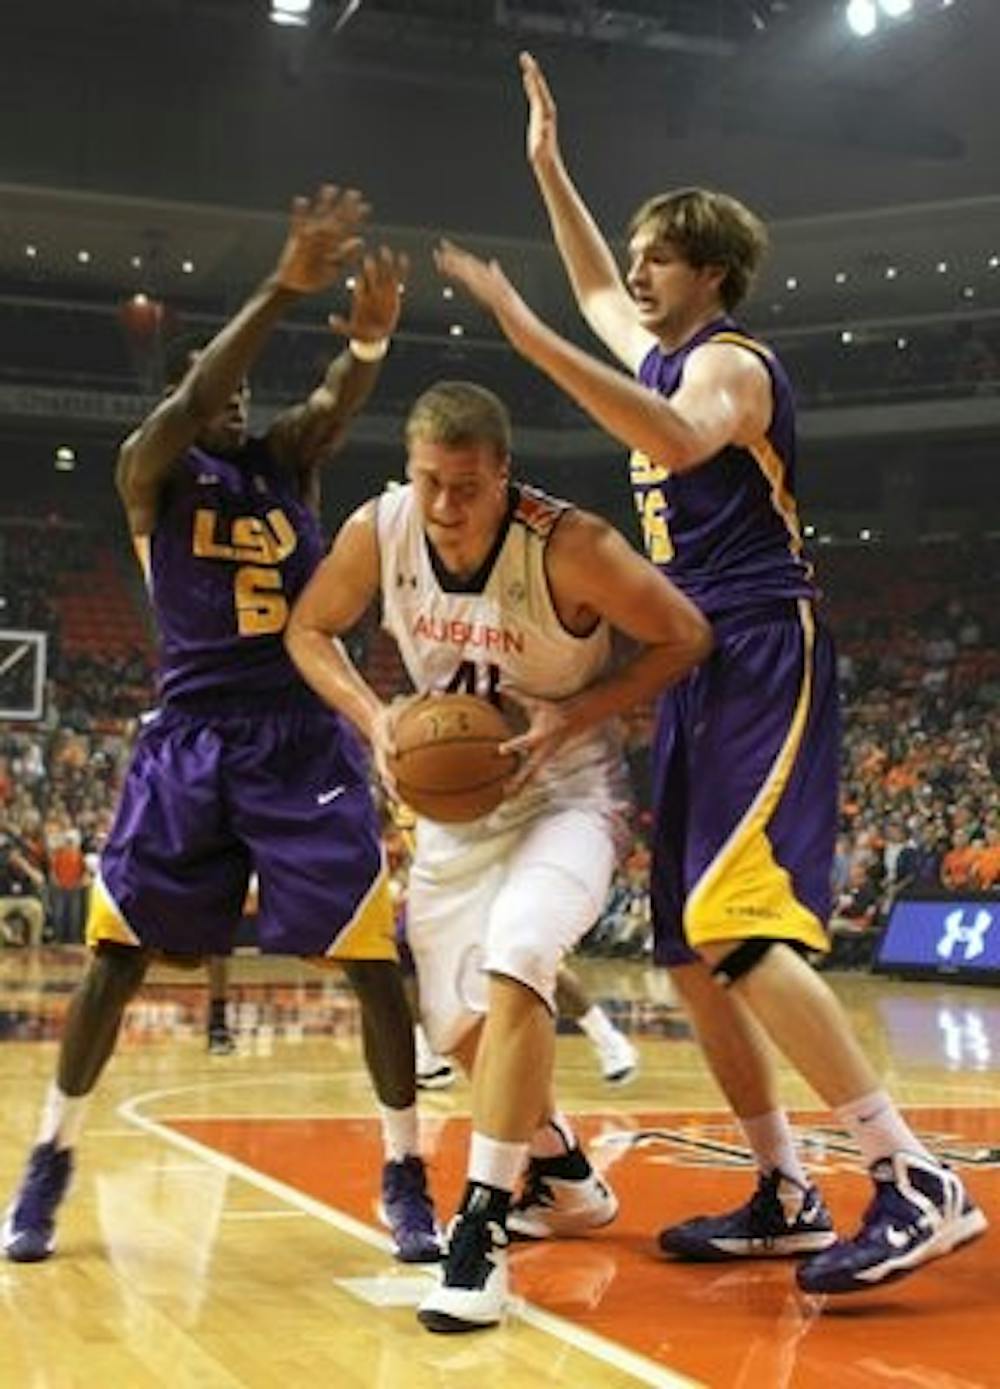 Senior Rob Chubb tries to get around 2 LSU defenders to get a basket.
(Katharine McCahey / PHOTOGRAPHER)